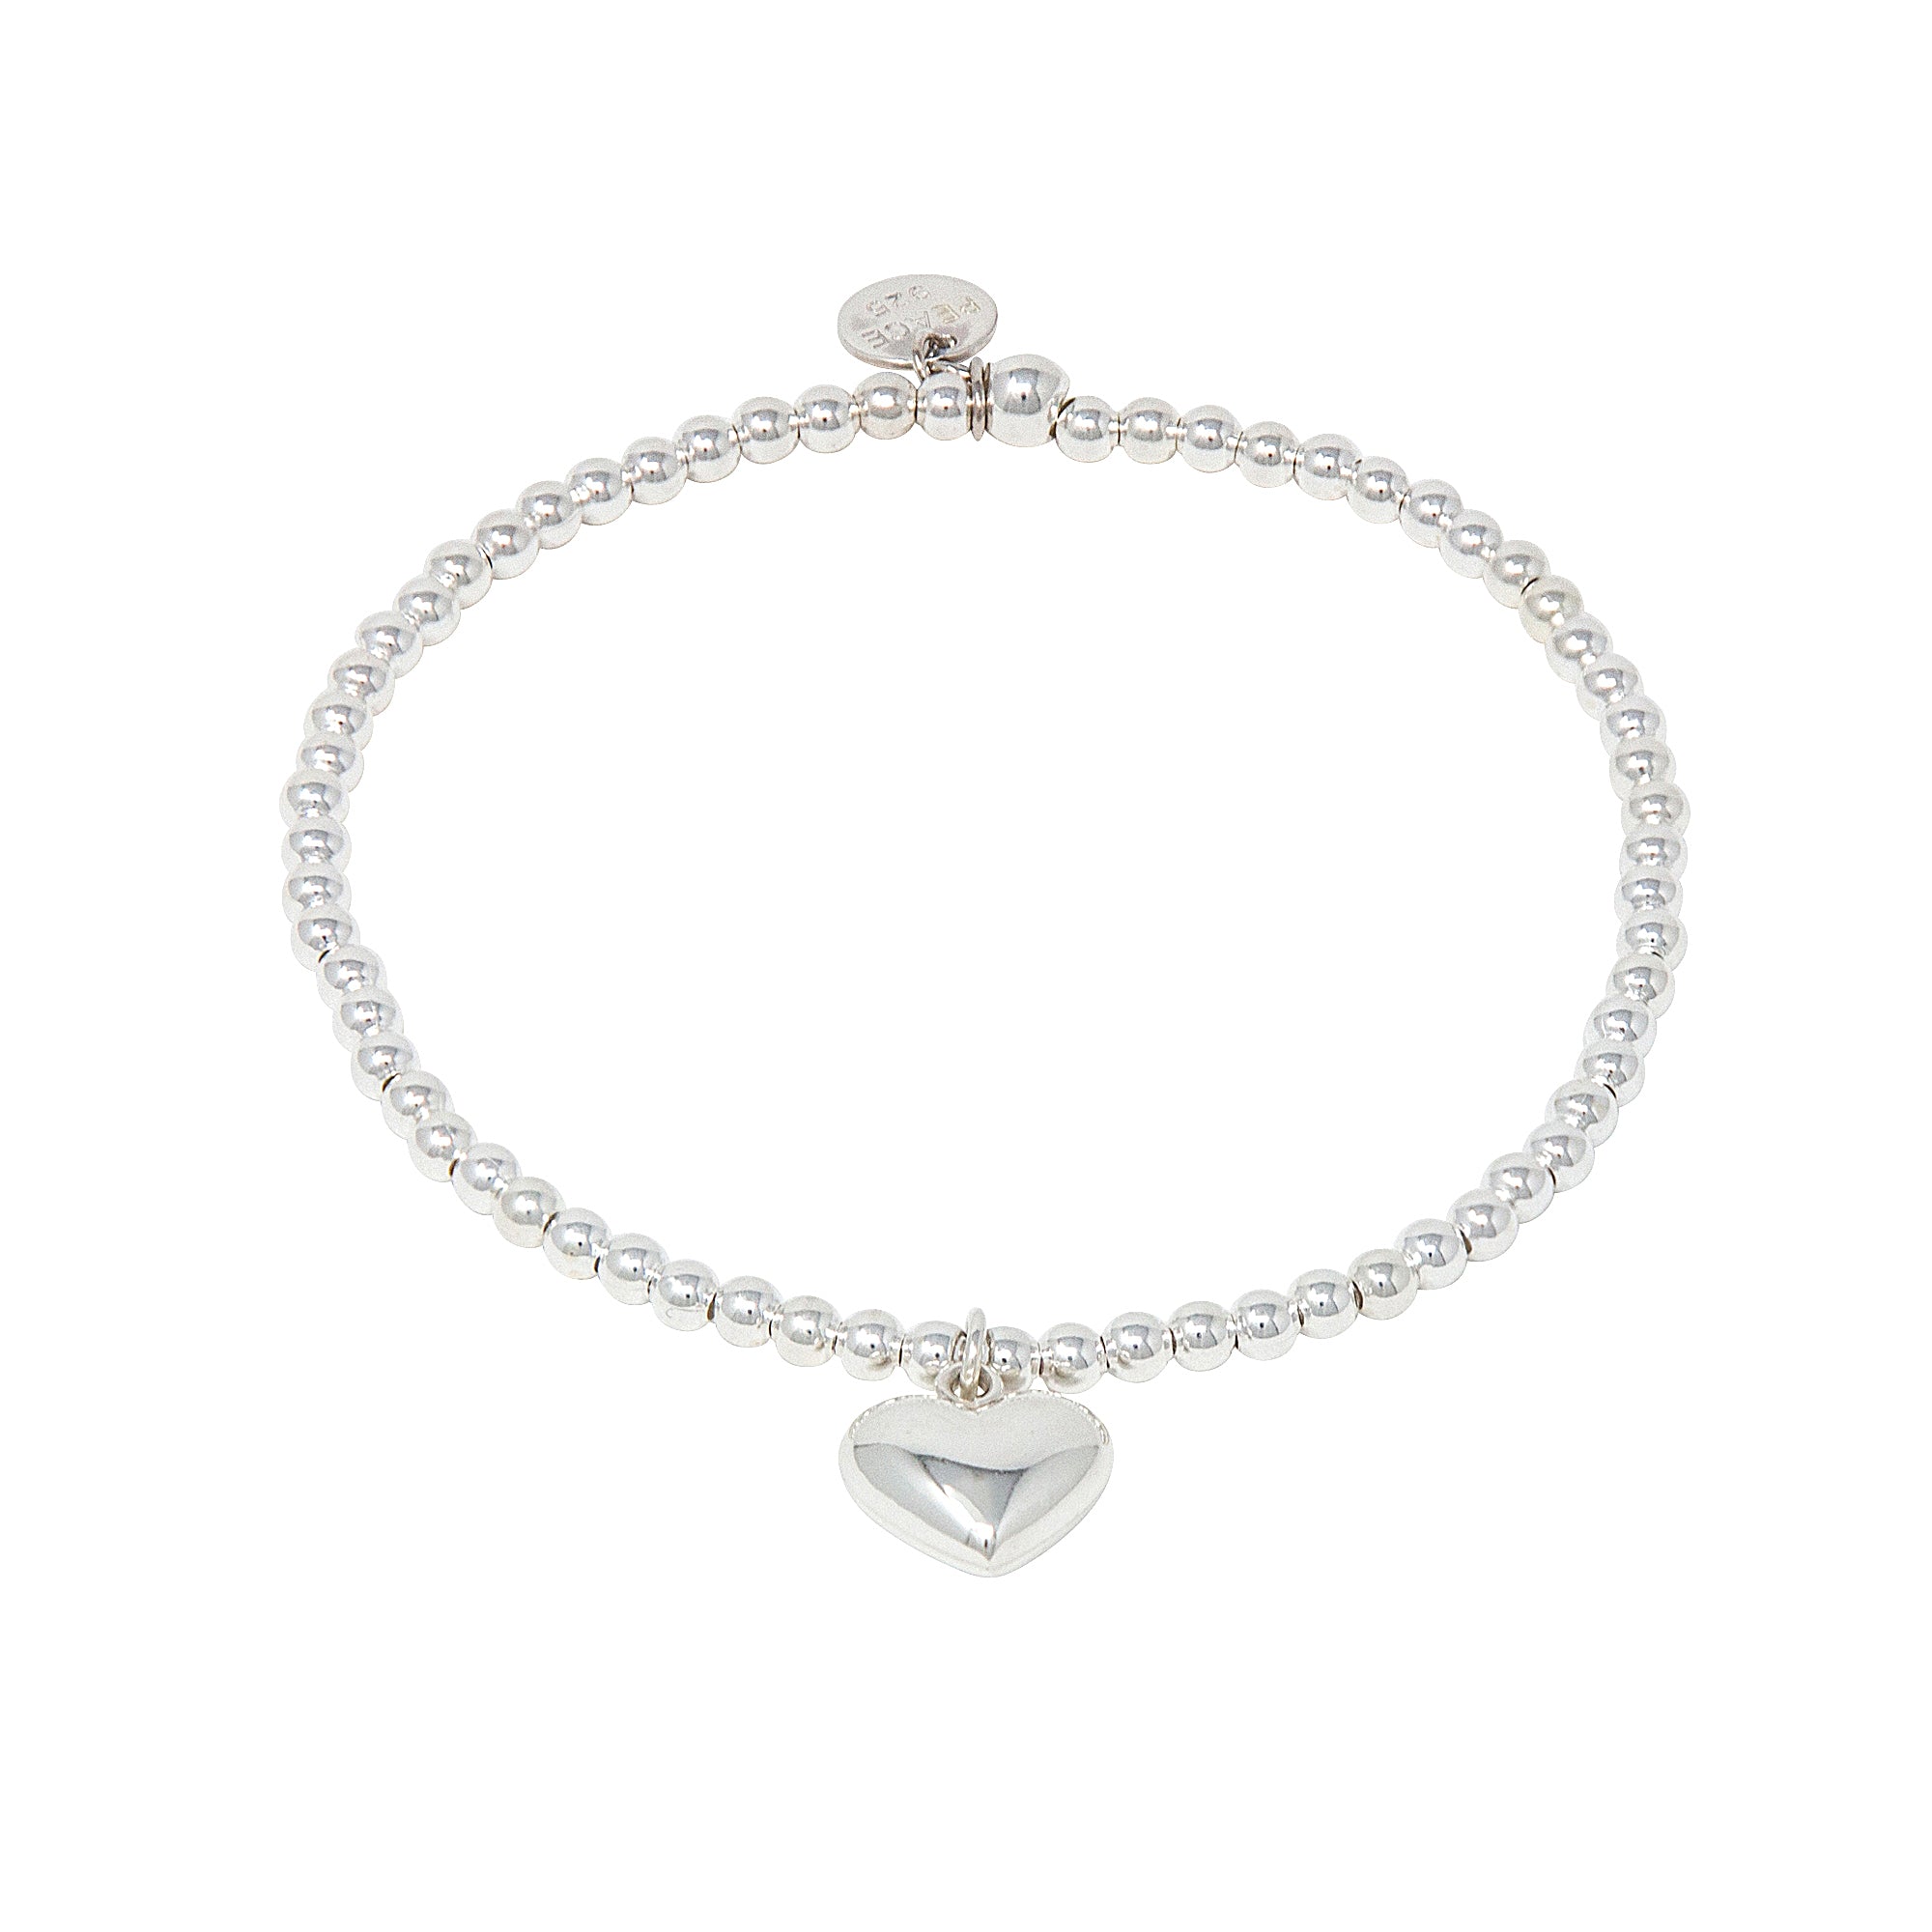 High polish bead ball bracelet with a puffed love heart charm.